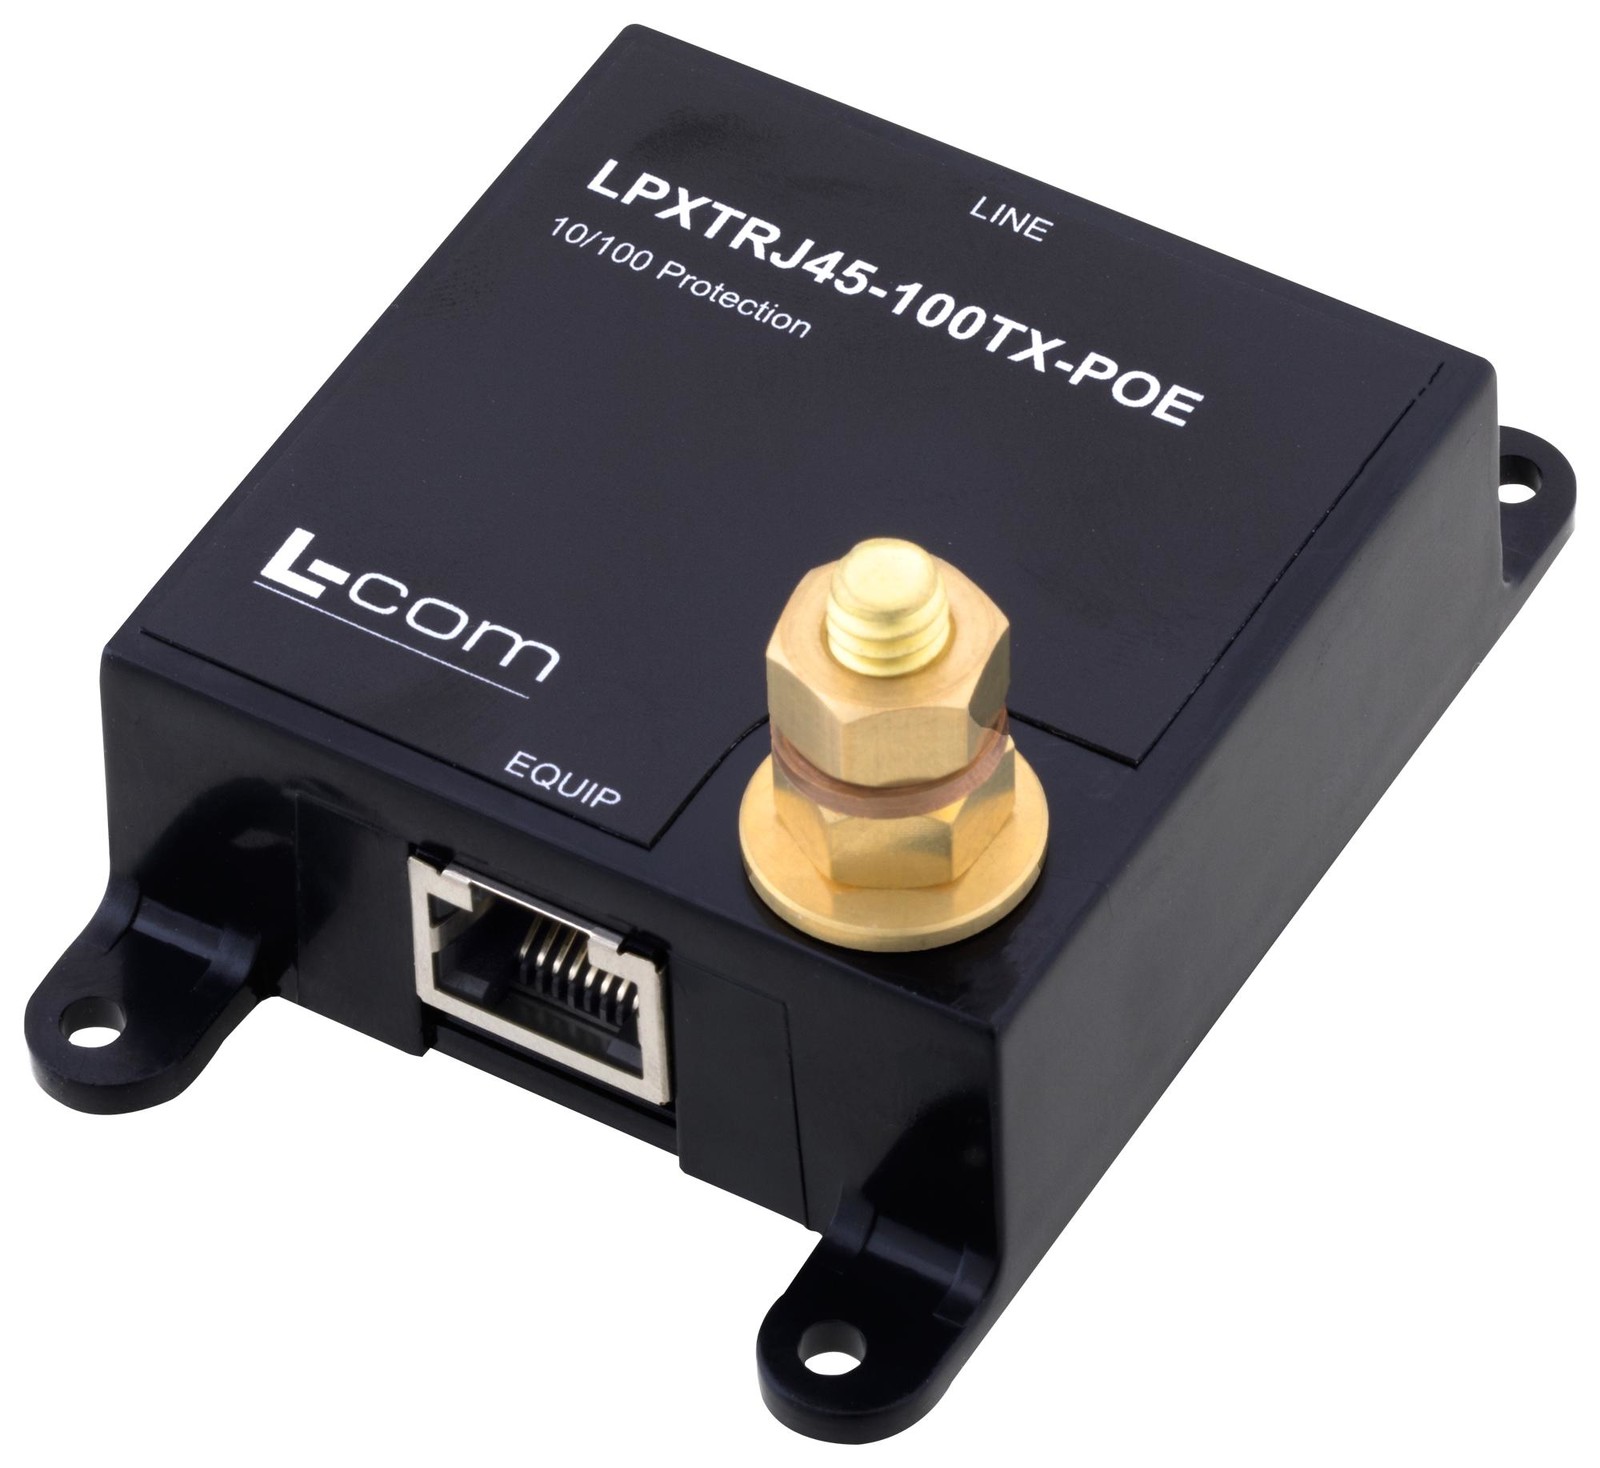 L-Com Lpxtrj45-100Tx-Poe Data/signal Line Protector, 1P, Panel